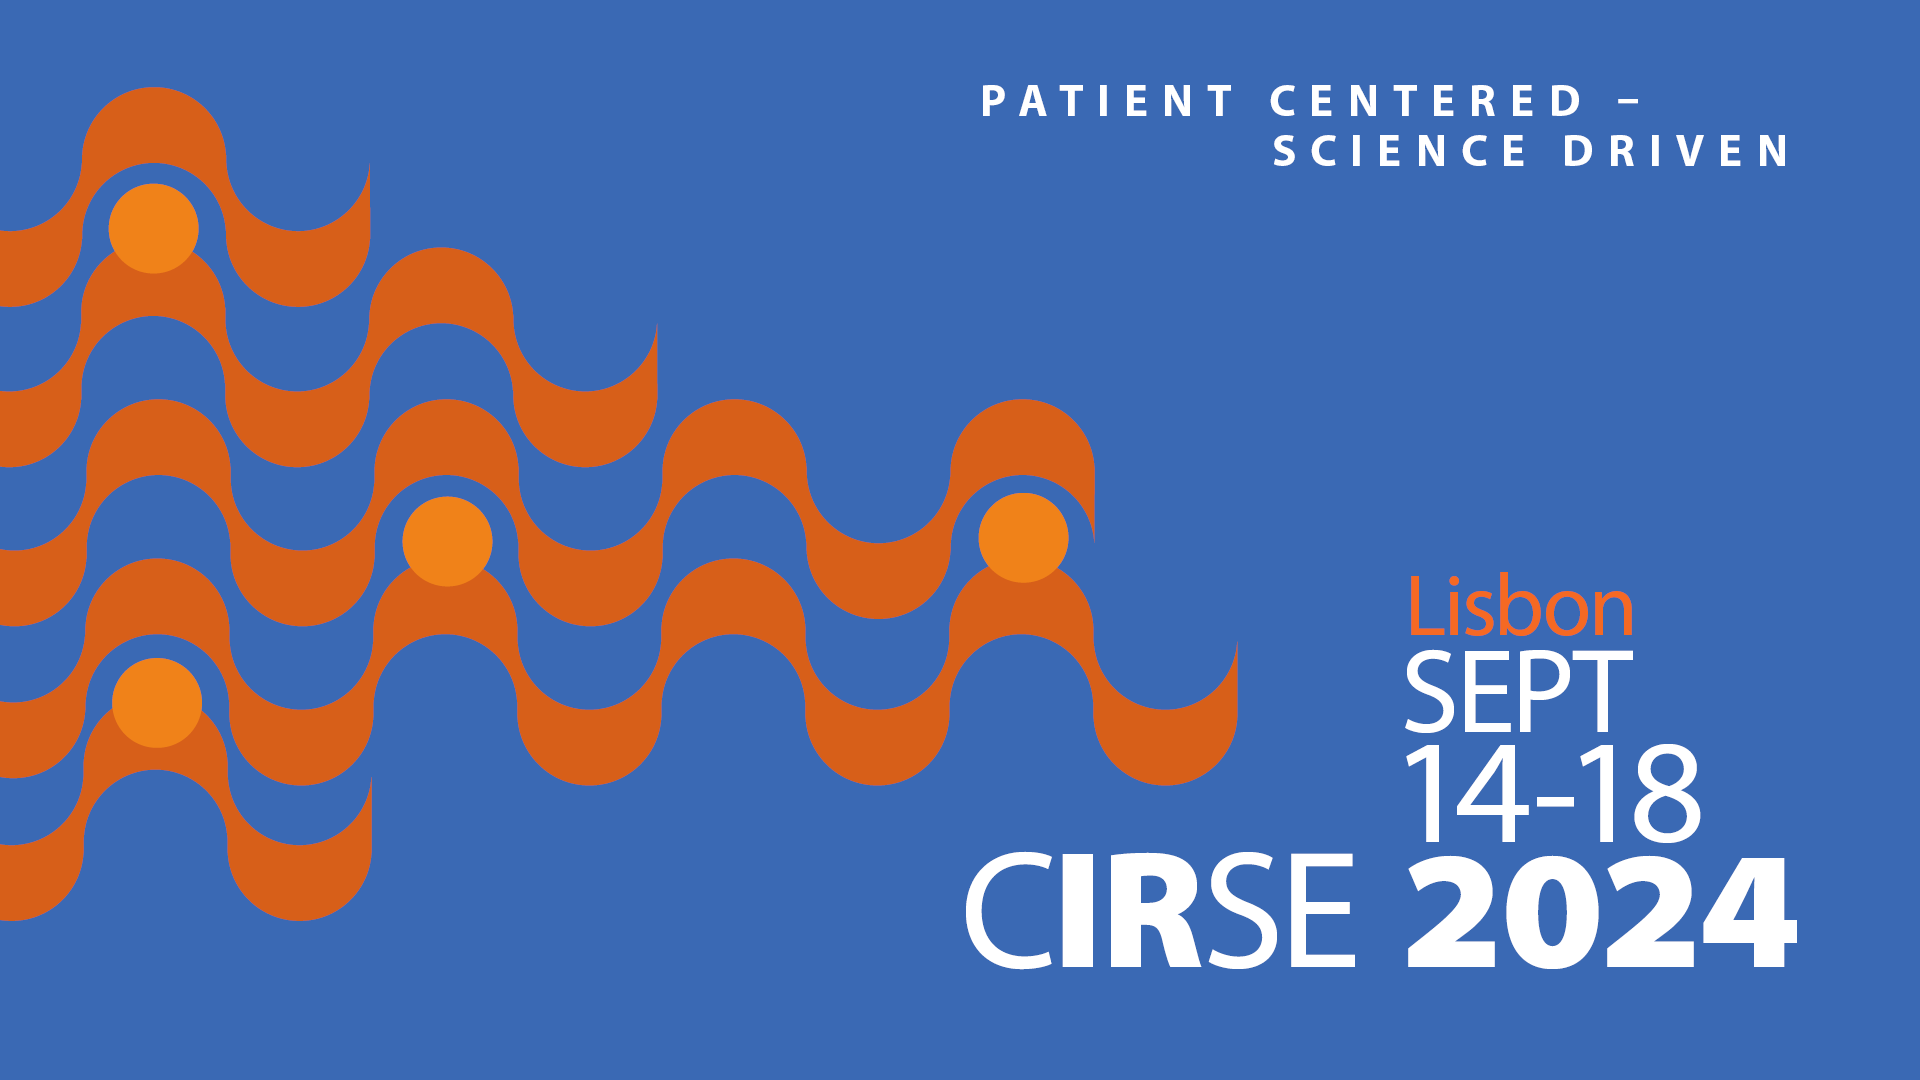 The CIRSE Annual Congress 2024 Lisbon Venues